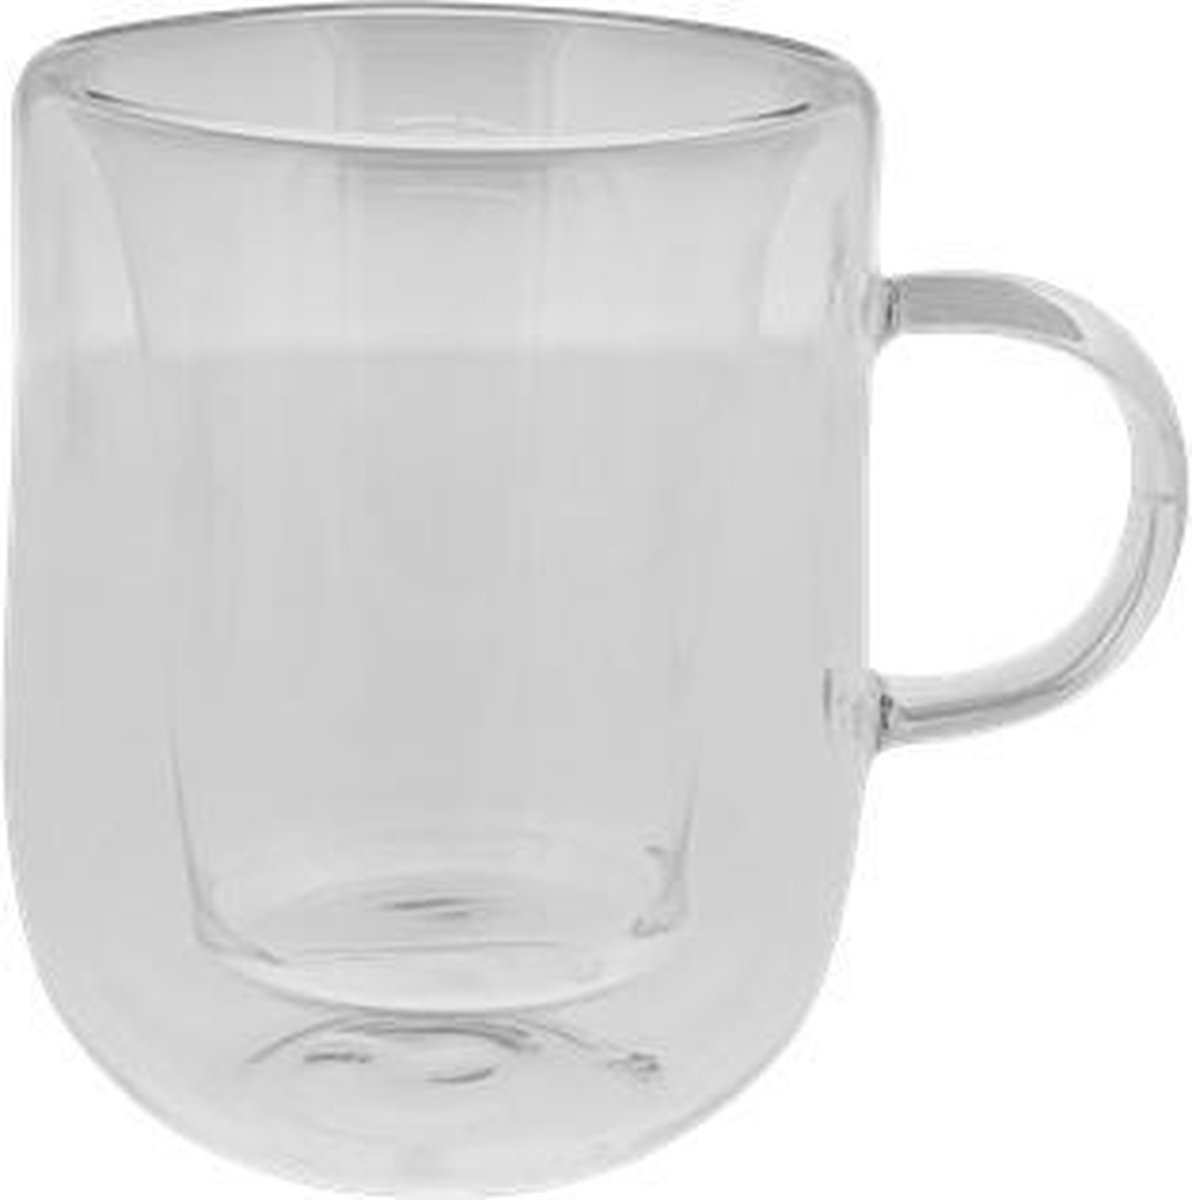 bol.com | Dubbelwandig Koffie- en Theeglas - Koude dranken glas - 20cl -  200 ml